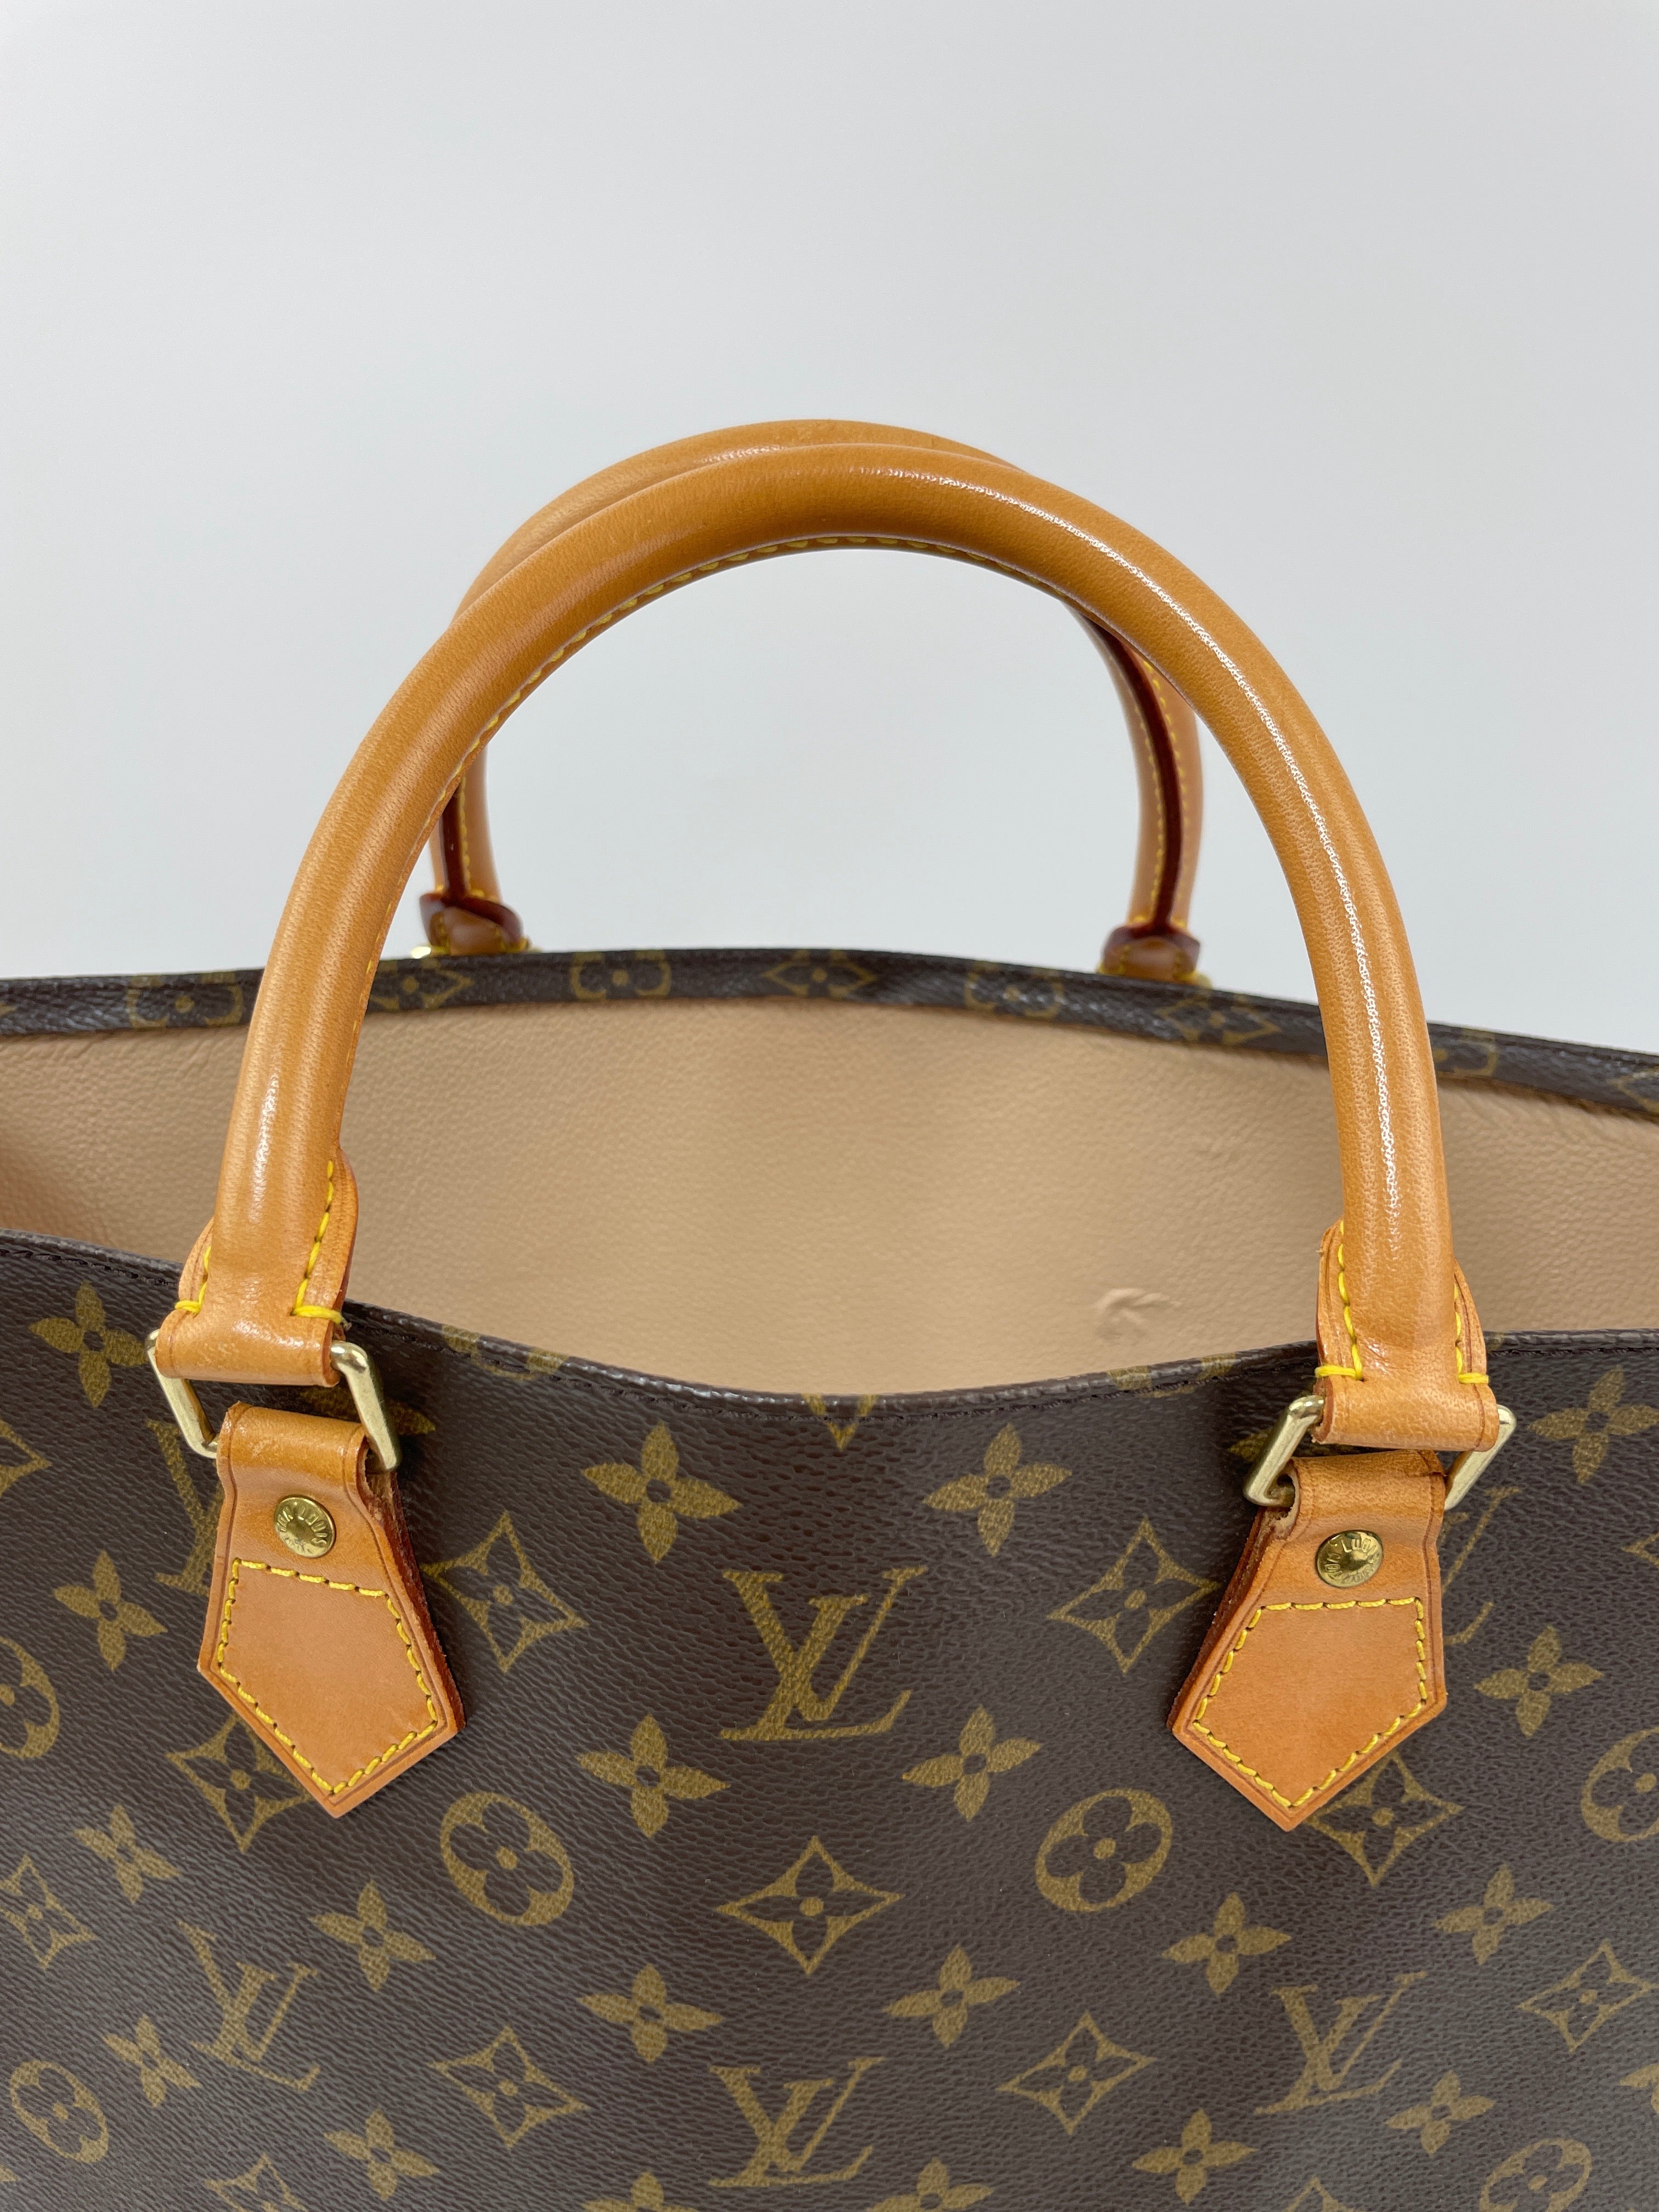 Louis Vuitton Handbag Sac Shopping Monogram Canvas Tote Bag W